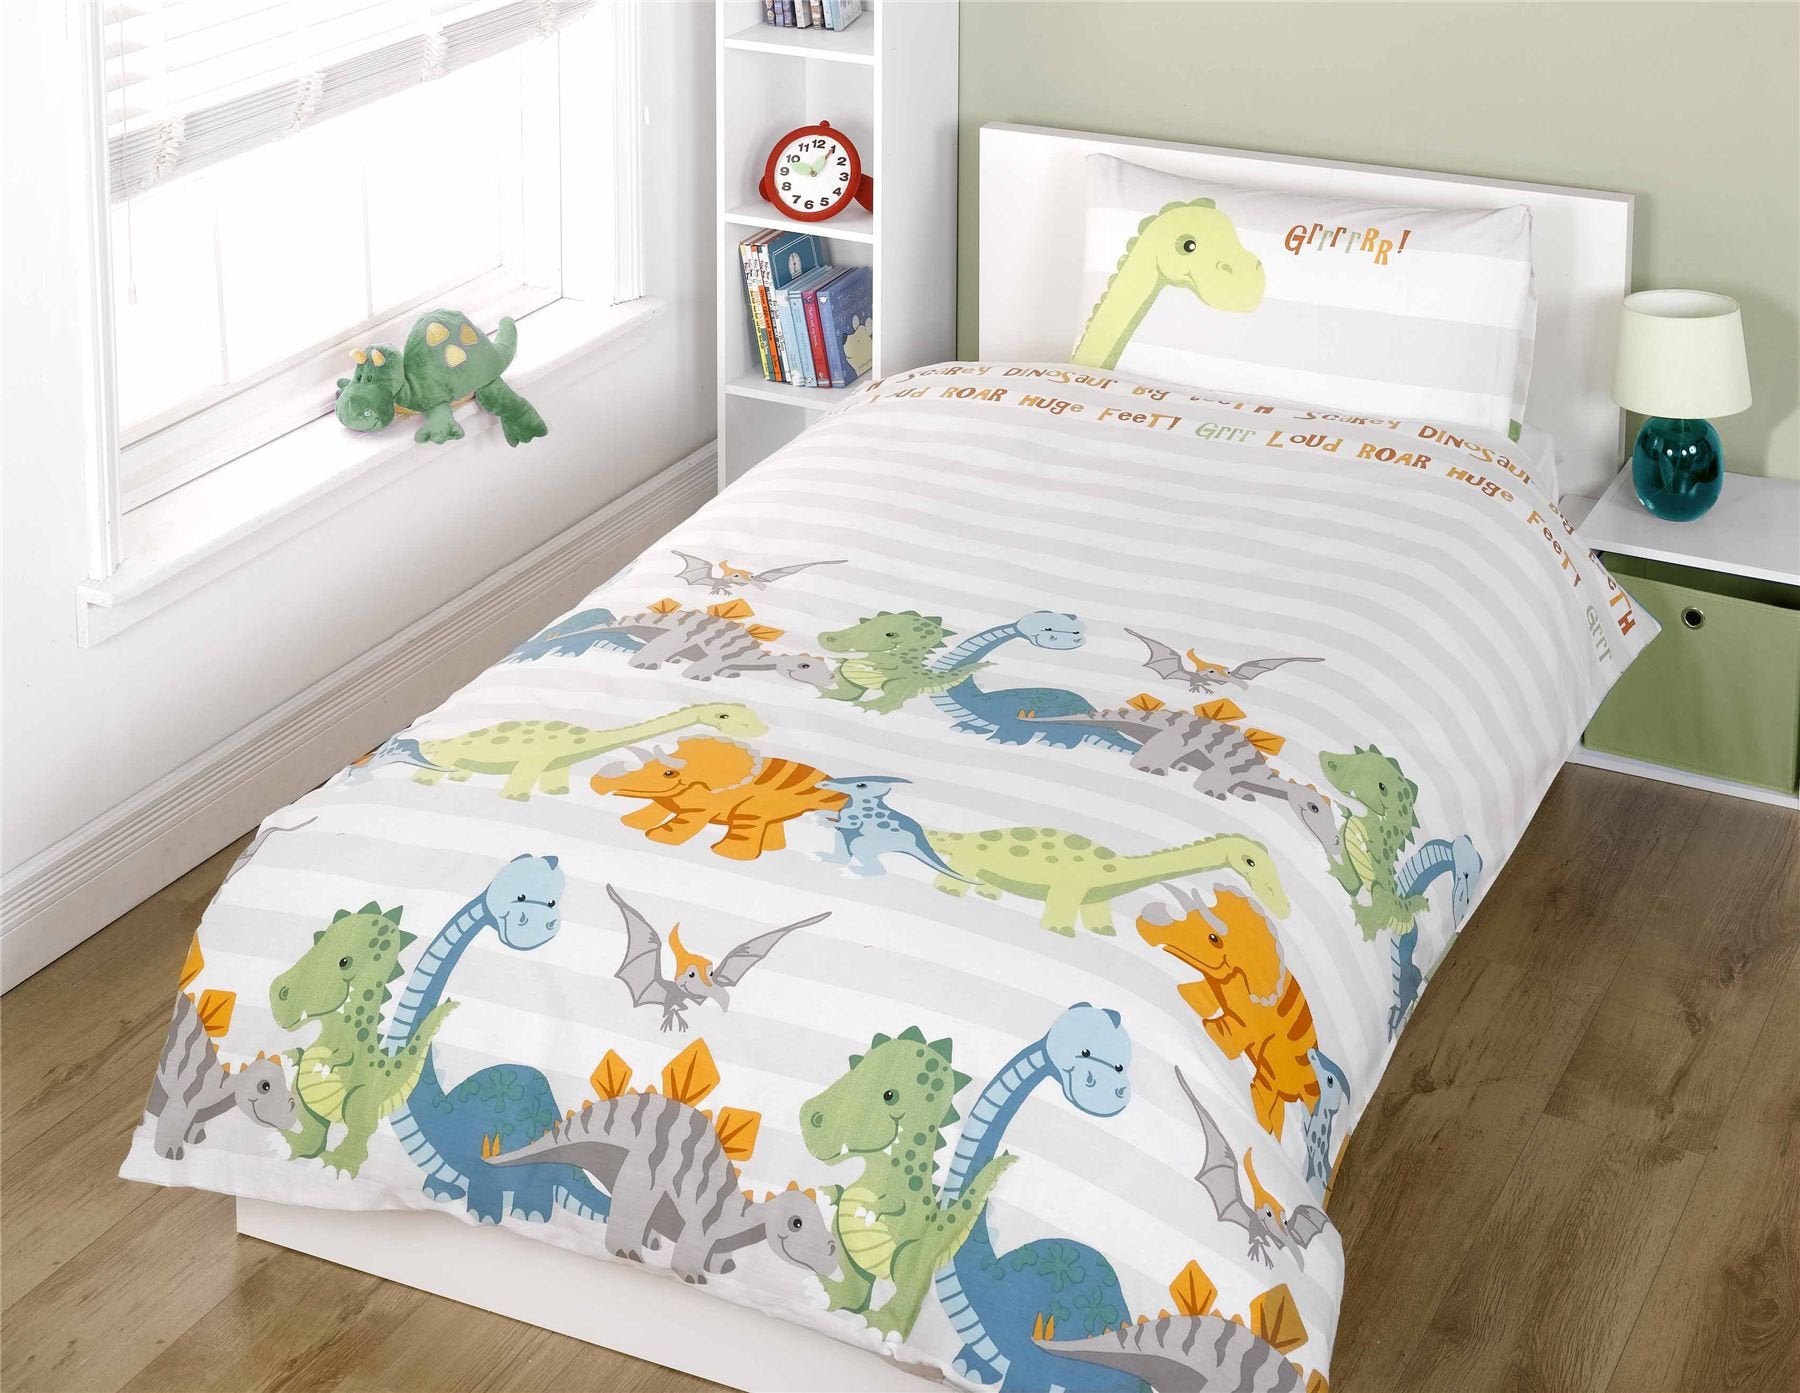 Rapport Home Dinosaur Duvet Cover Set Childrens Bedding, Natural, 120 x 150cm